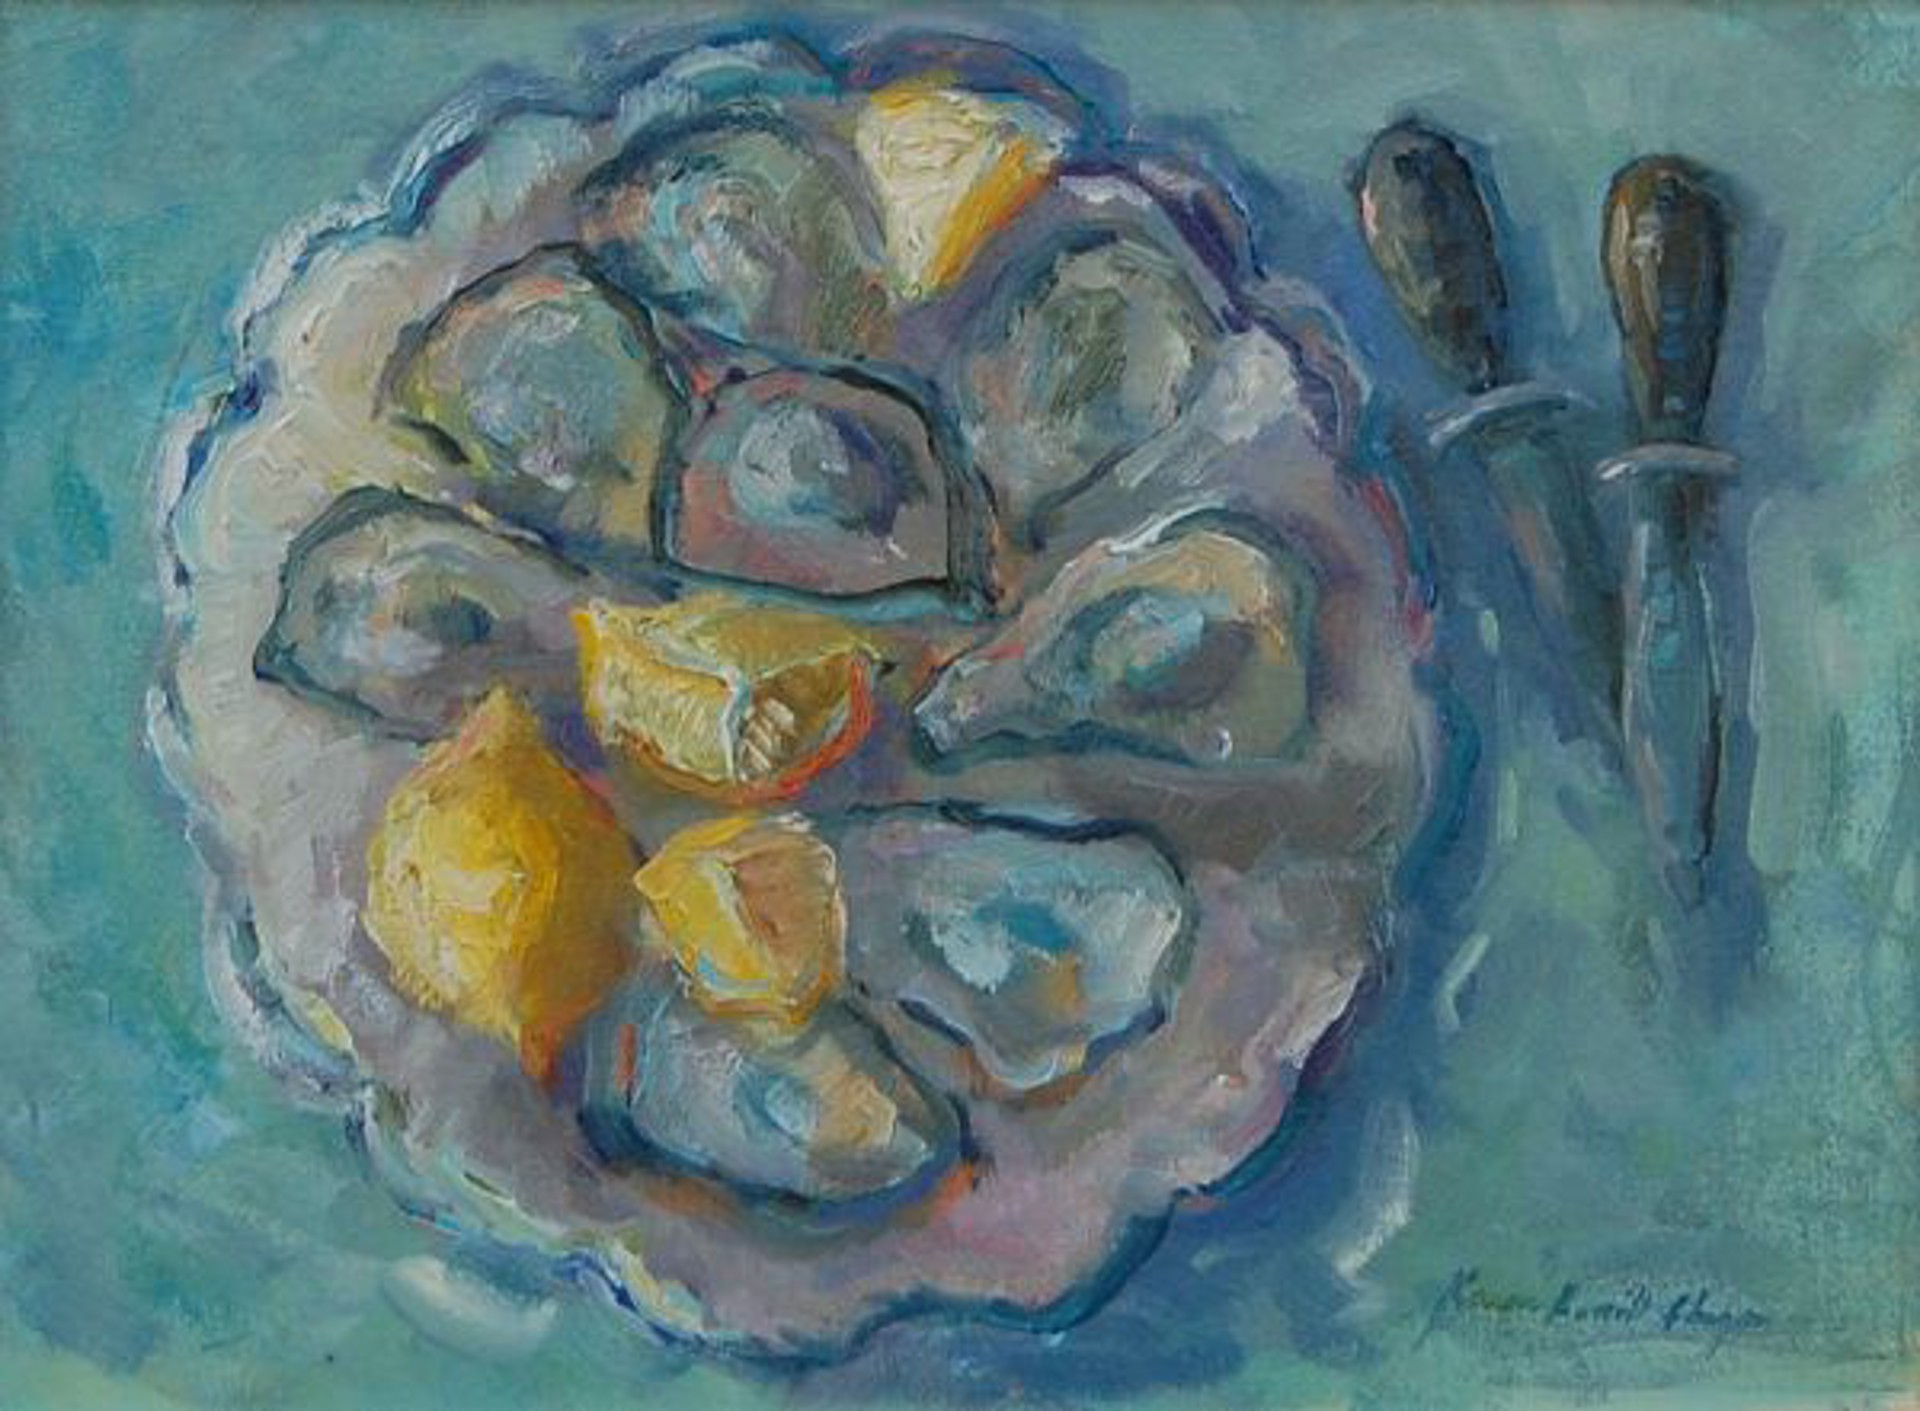 Oysters with Friends by Karen Hewitt Hagan